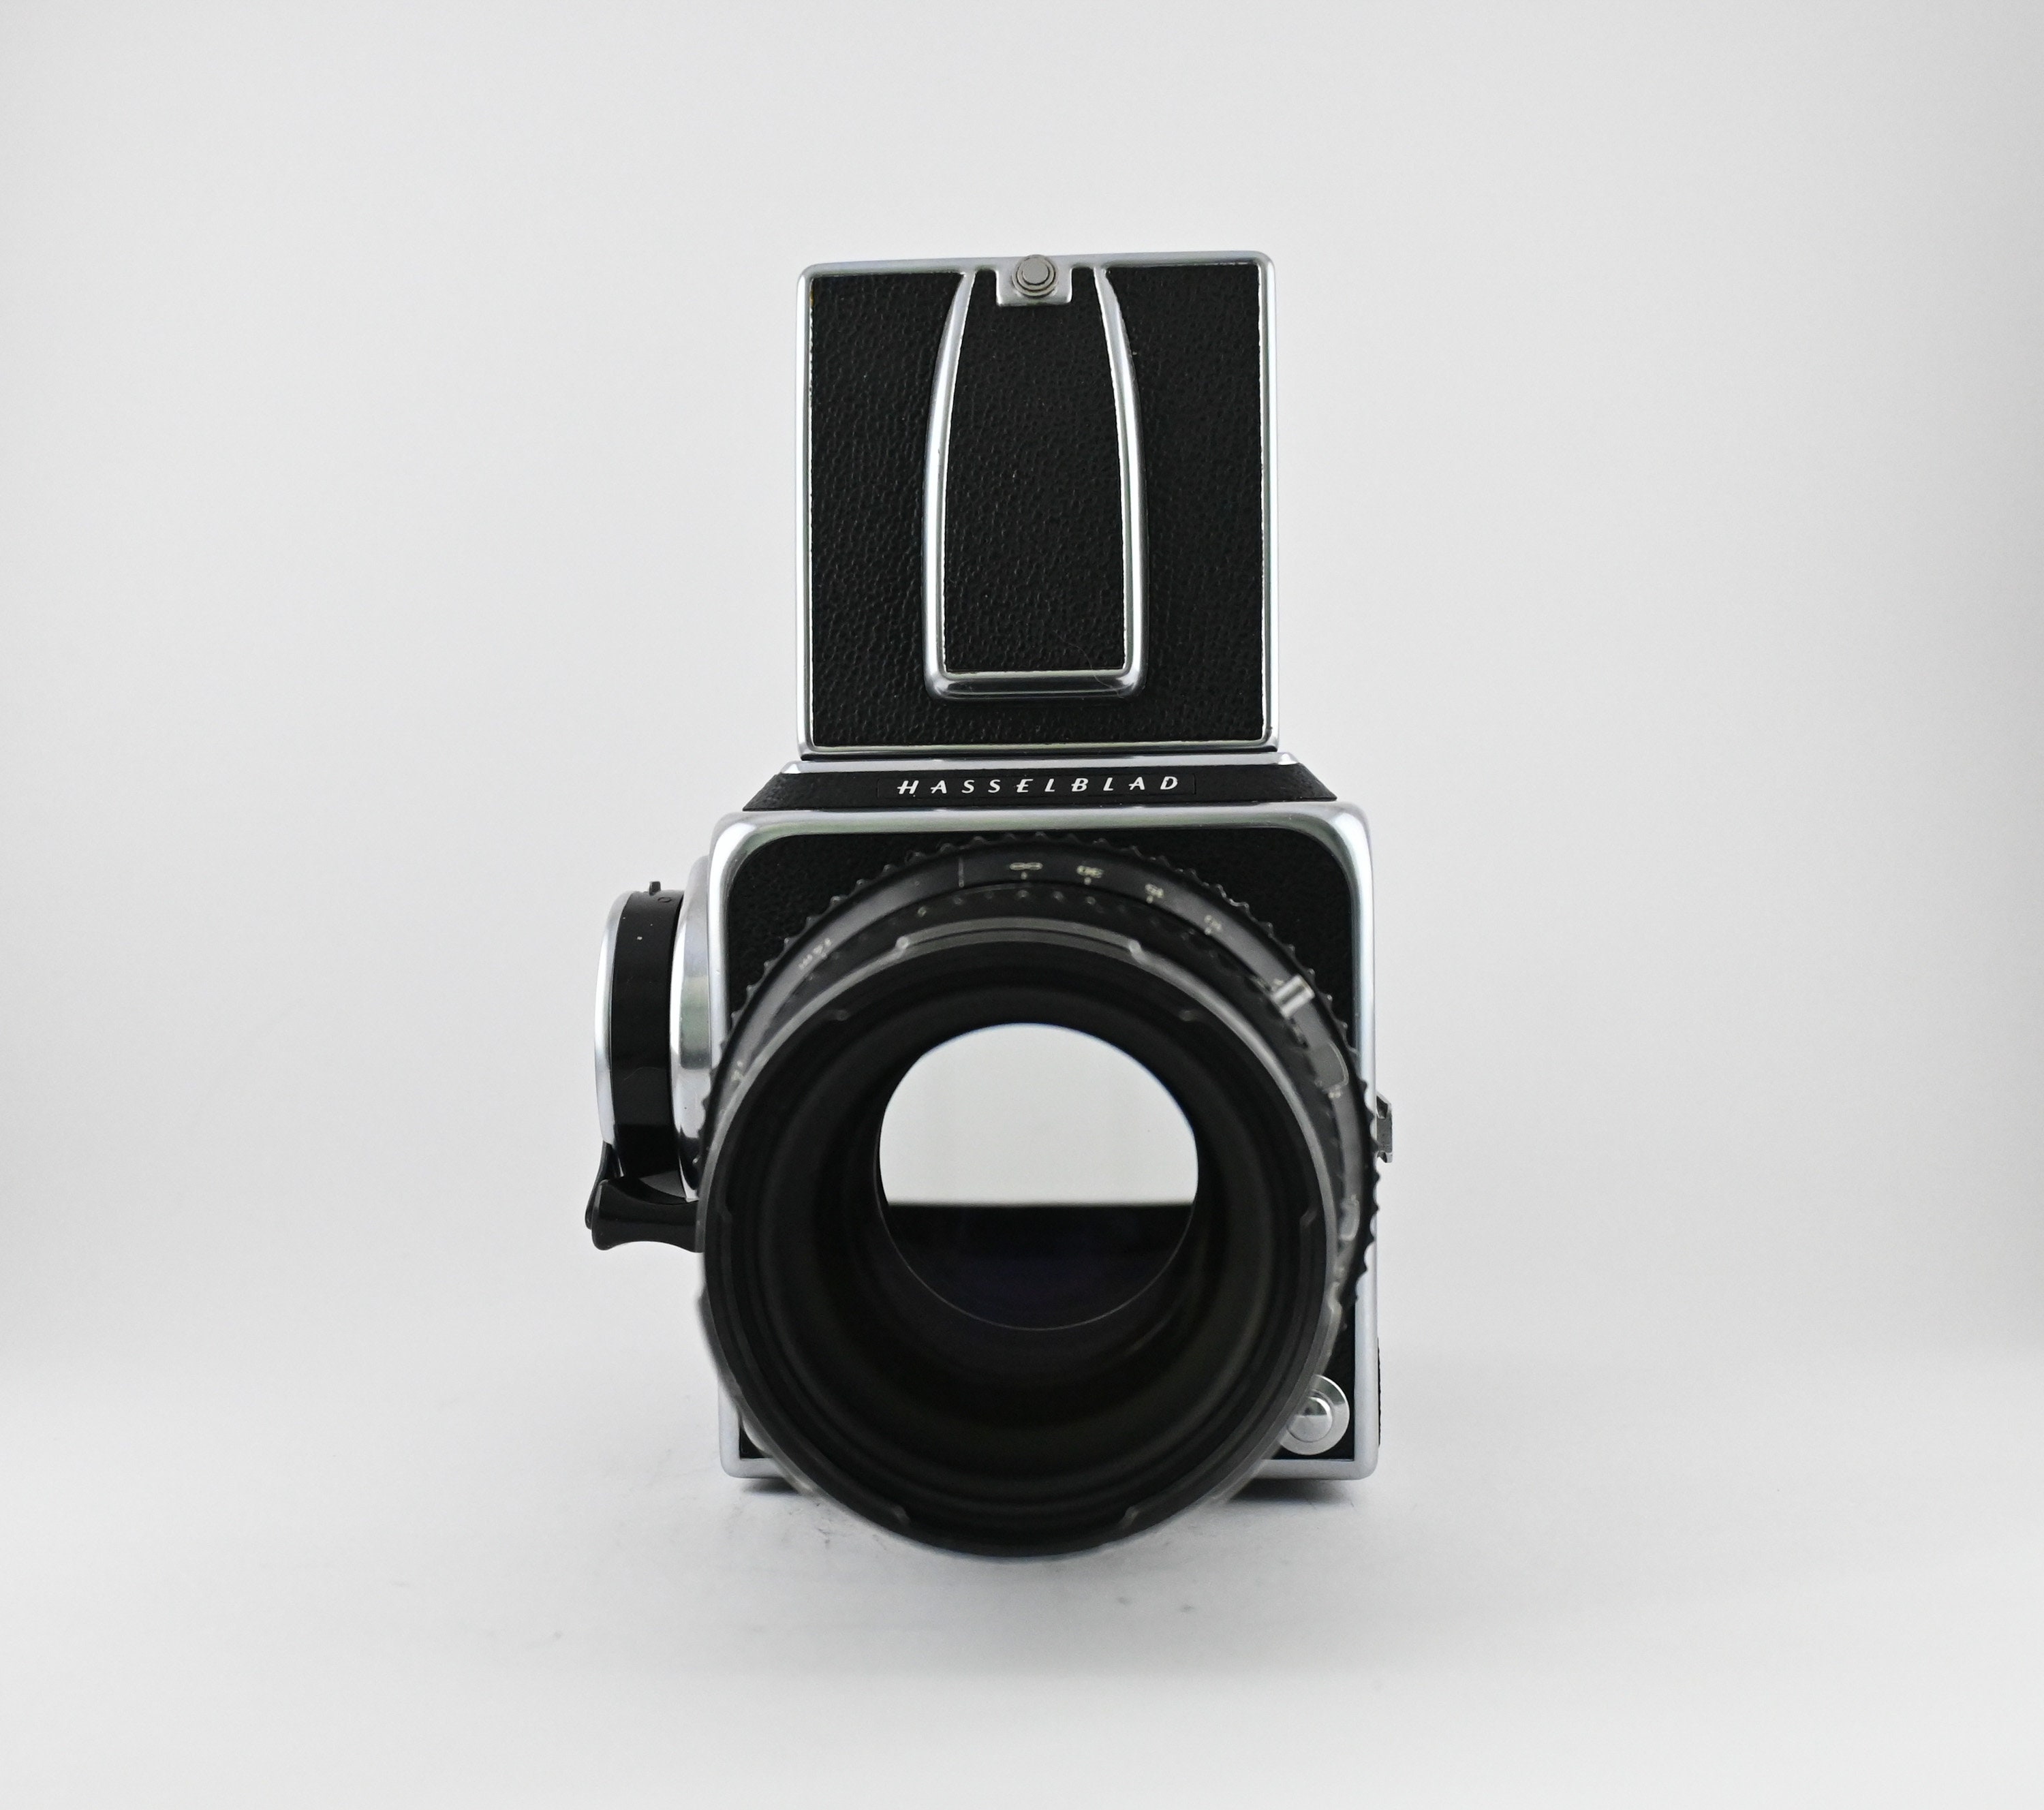 Hasselblad Camera image pic